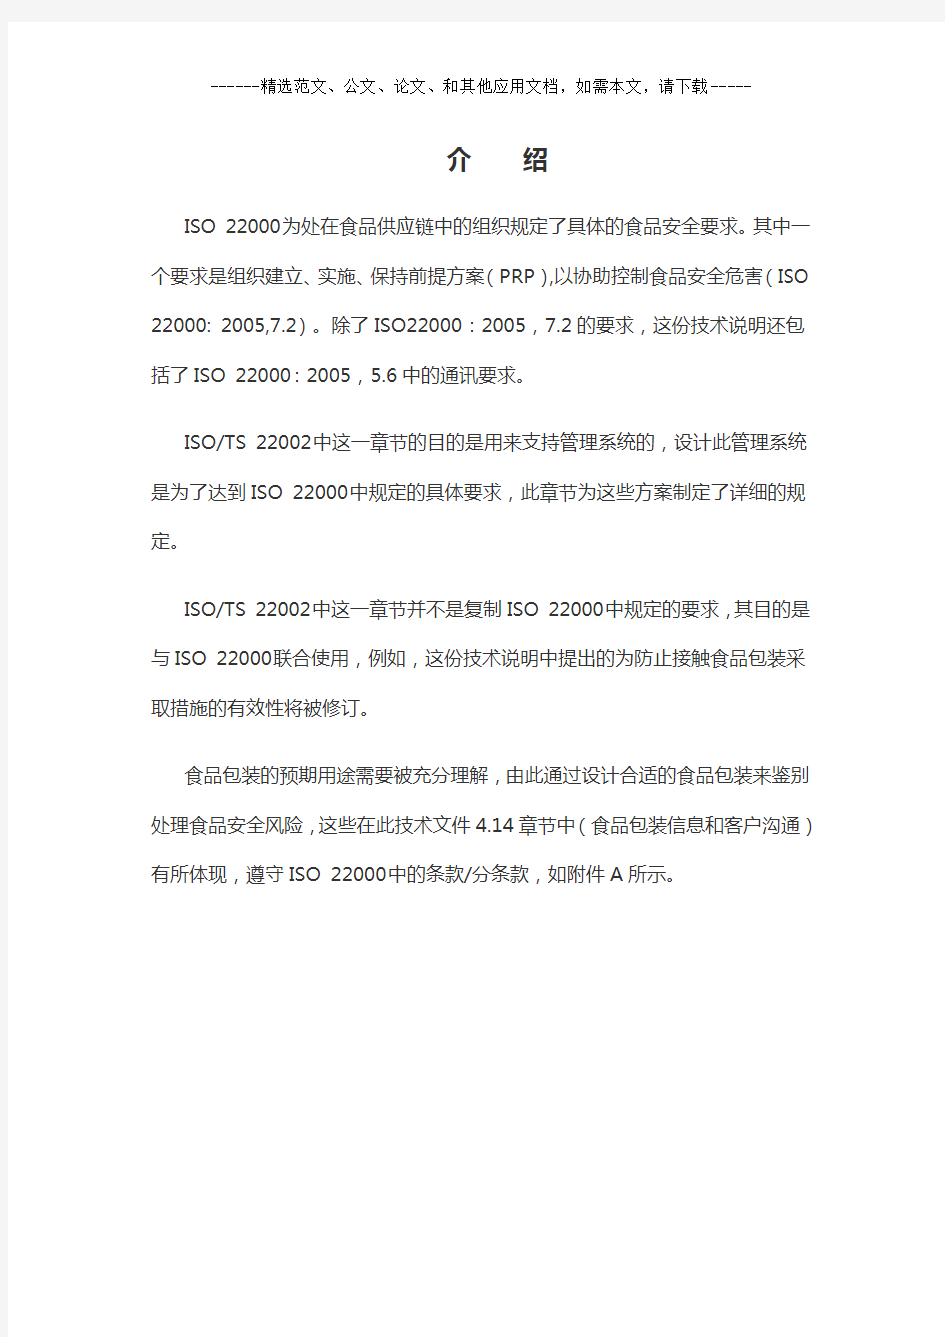 ISO22002：2013食品安全中文版翻译